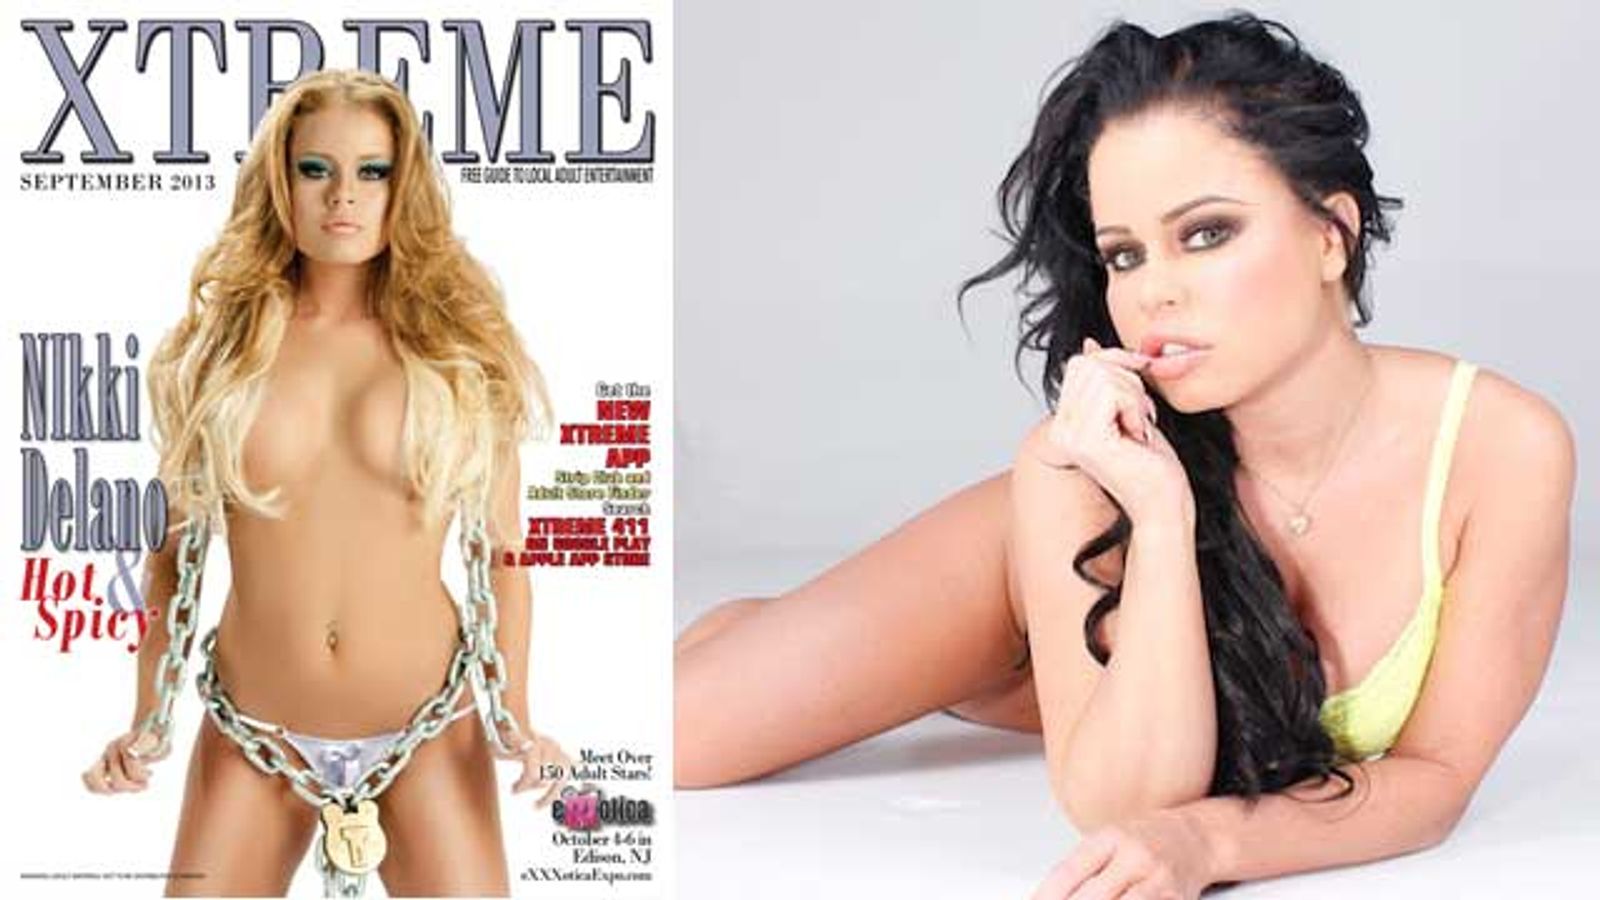 Nikki Delano Is Xtreme Mag's Cover Girl for September Issue